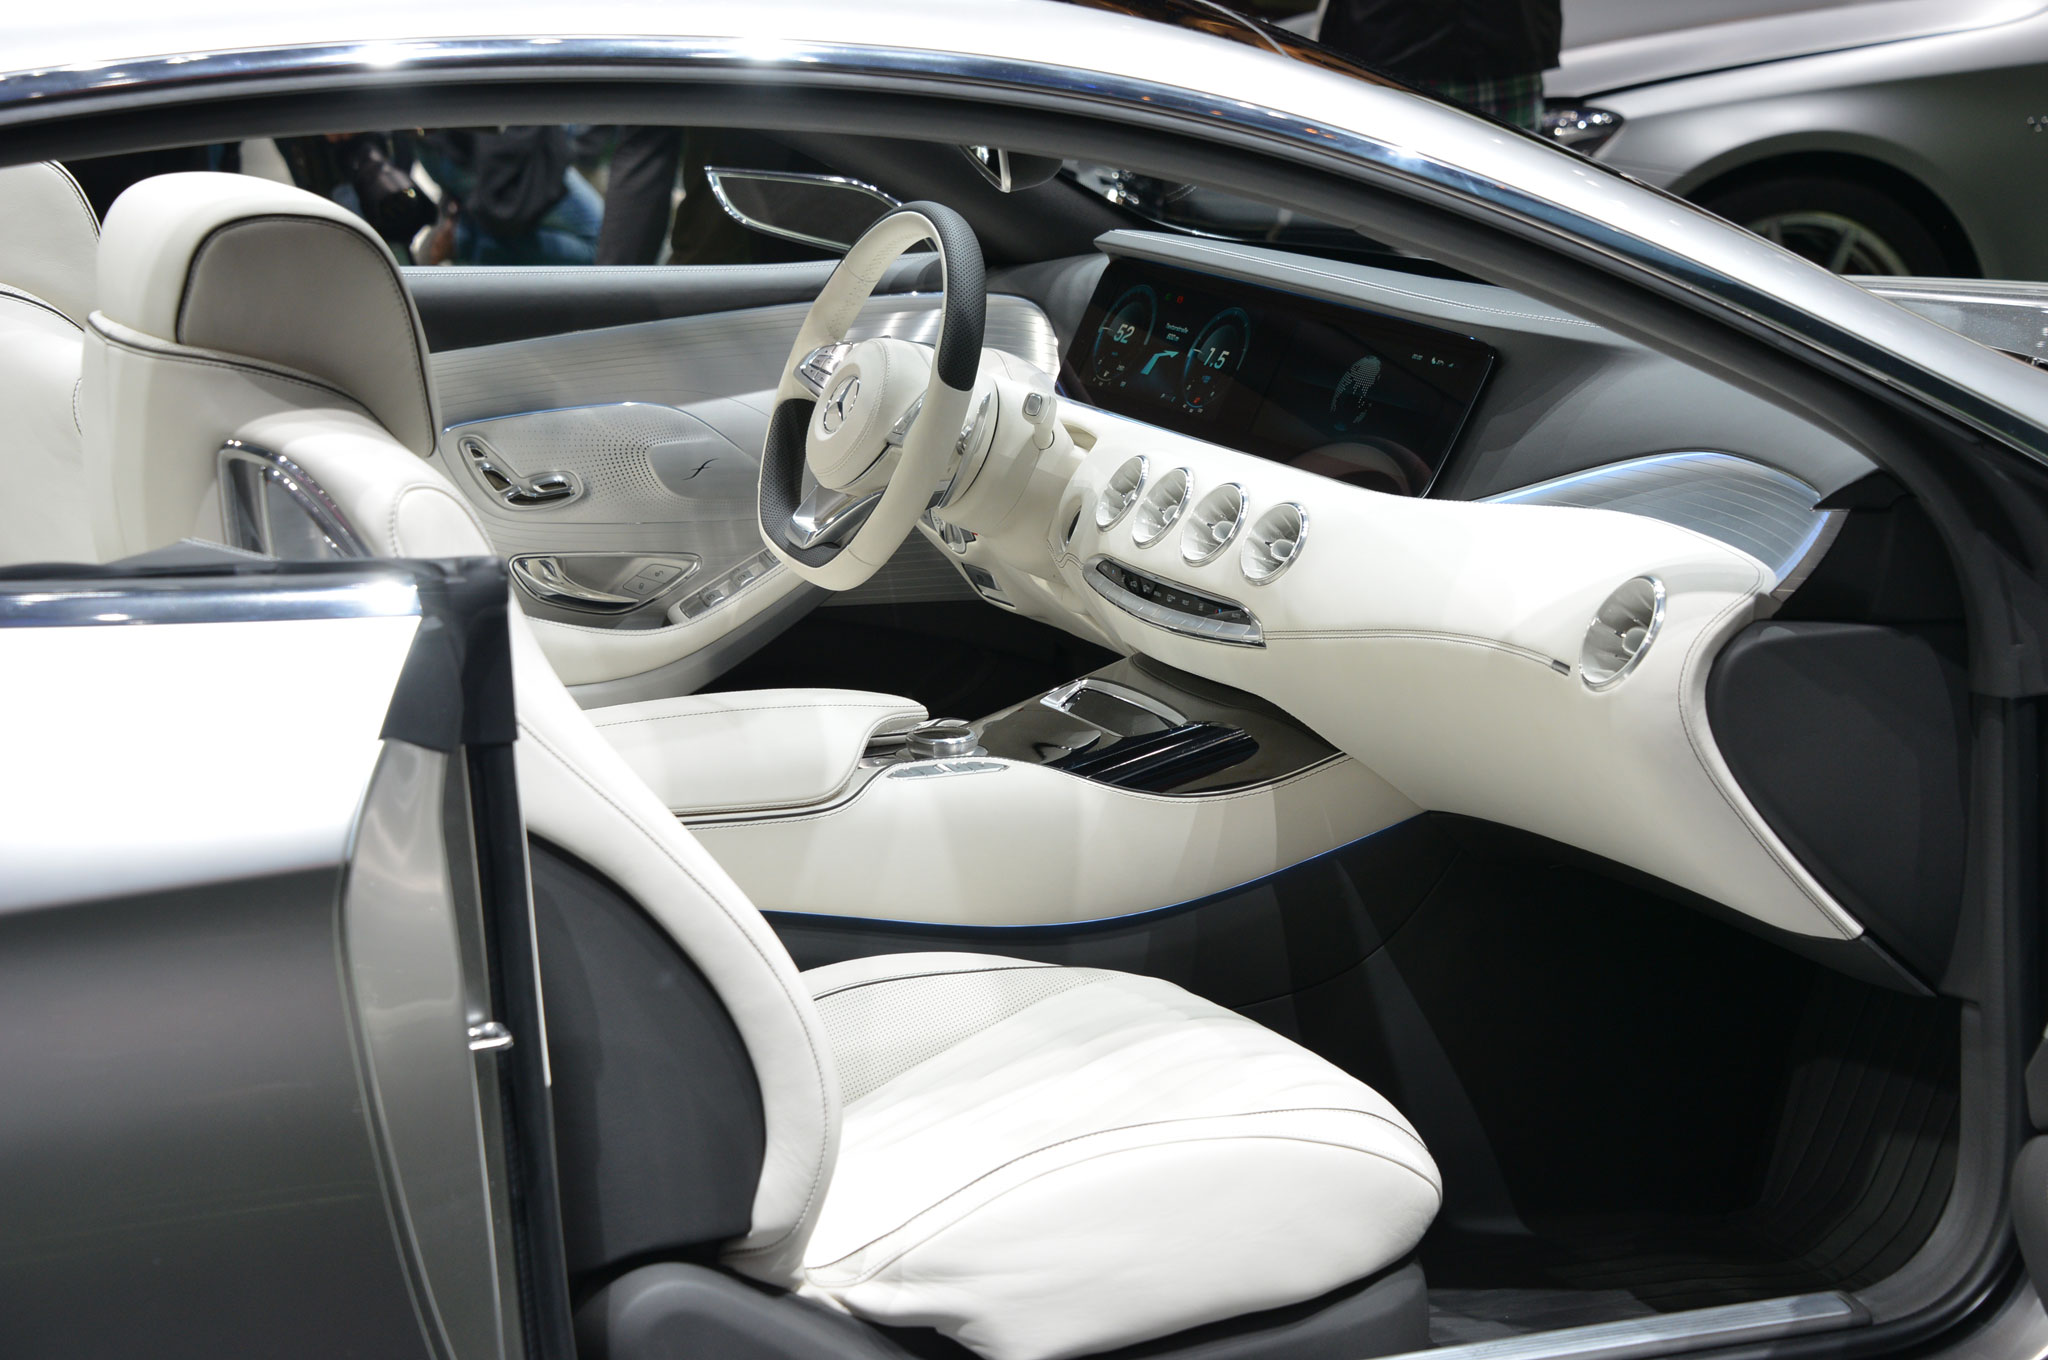 Mercedes Benz S Class Coupe Concept Interior View Mercedes